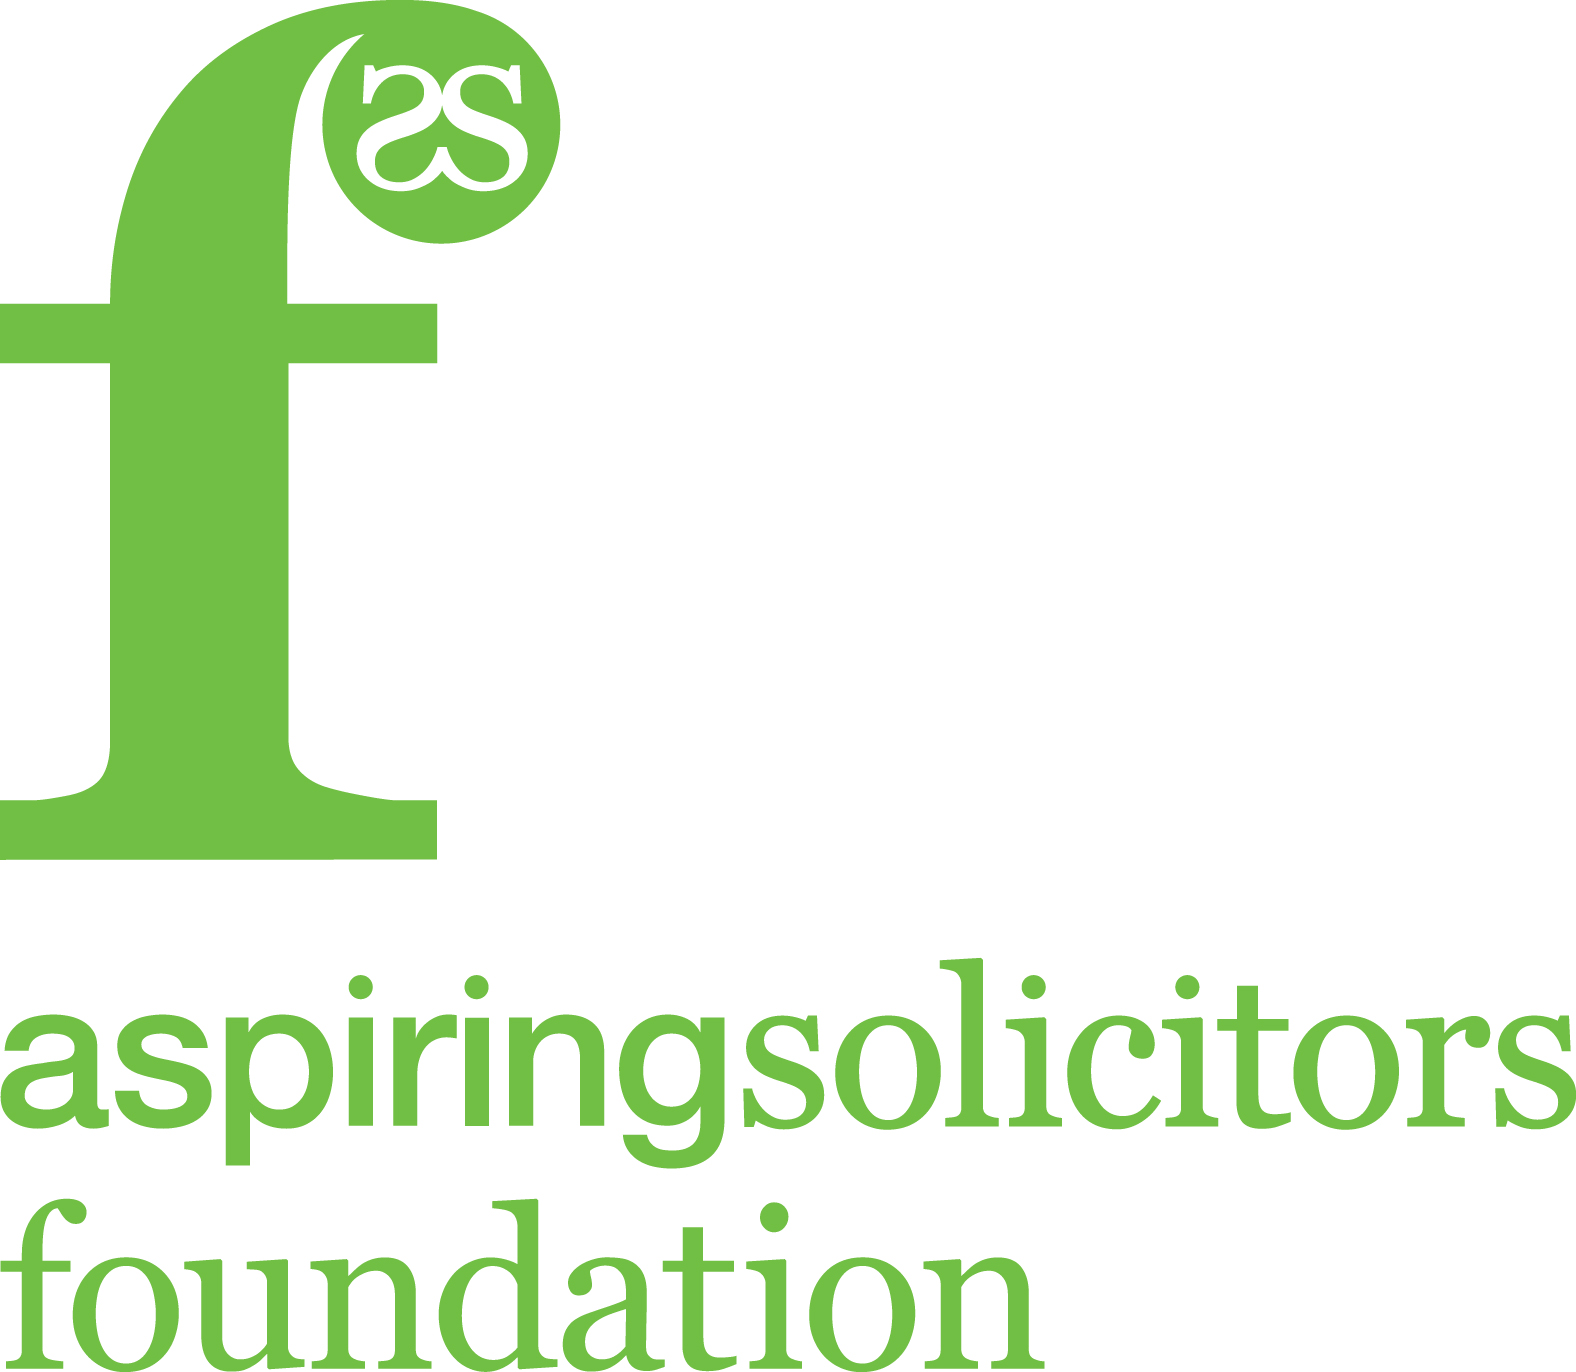 Aspiring Solicitors Foundation